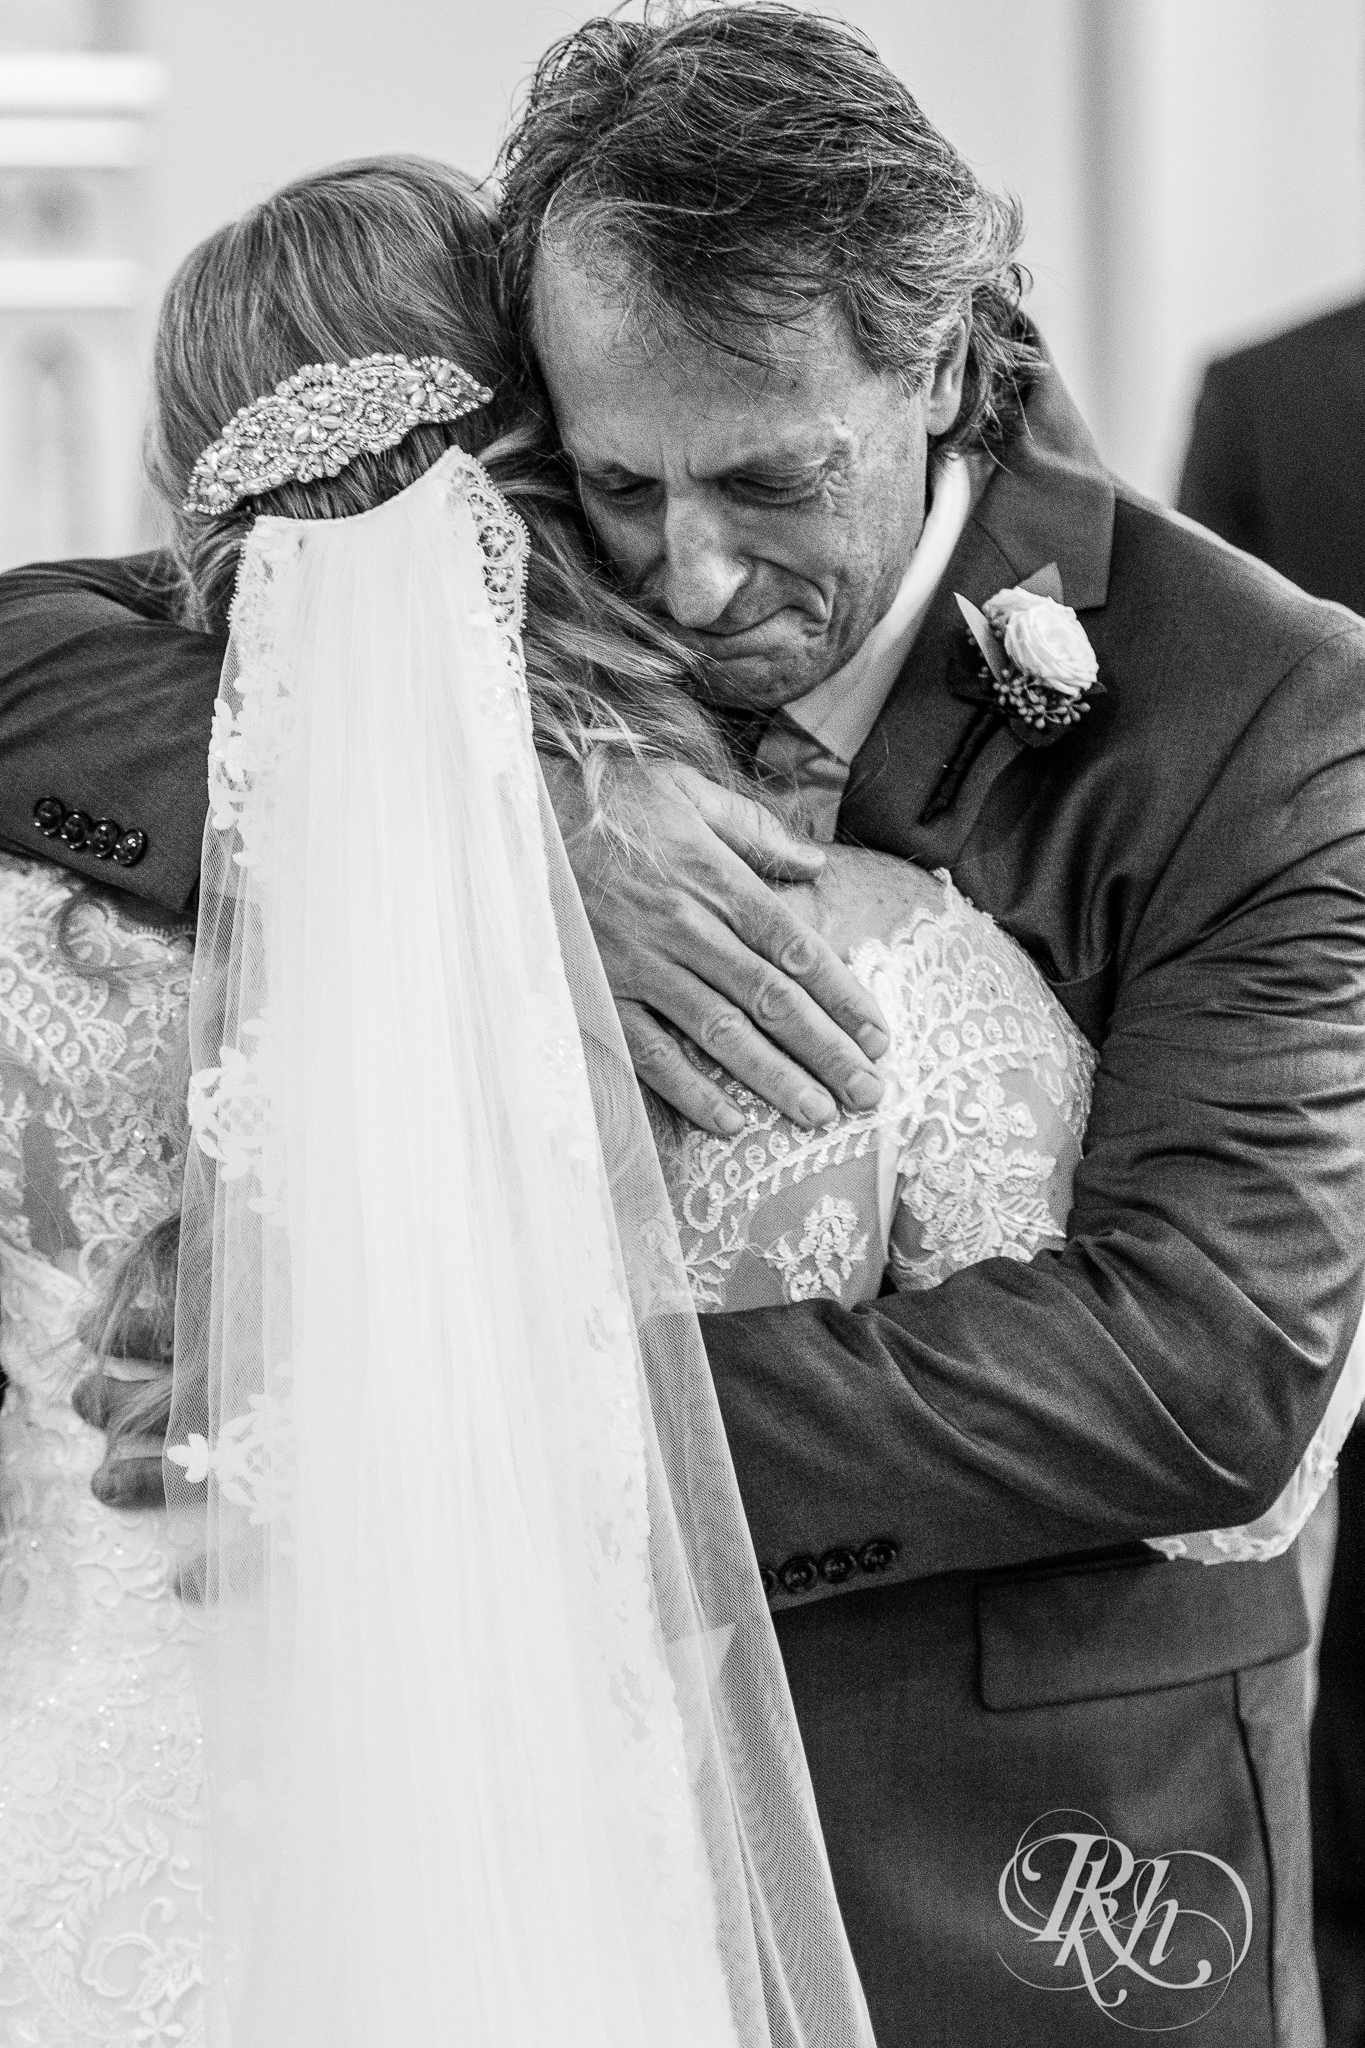 Dad hugging bride at alter at church wedding in New Prague, Minnesota.